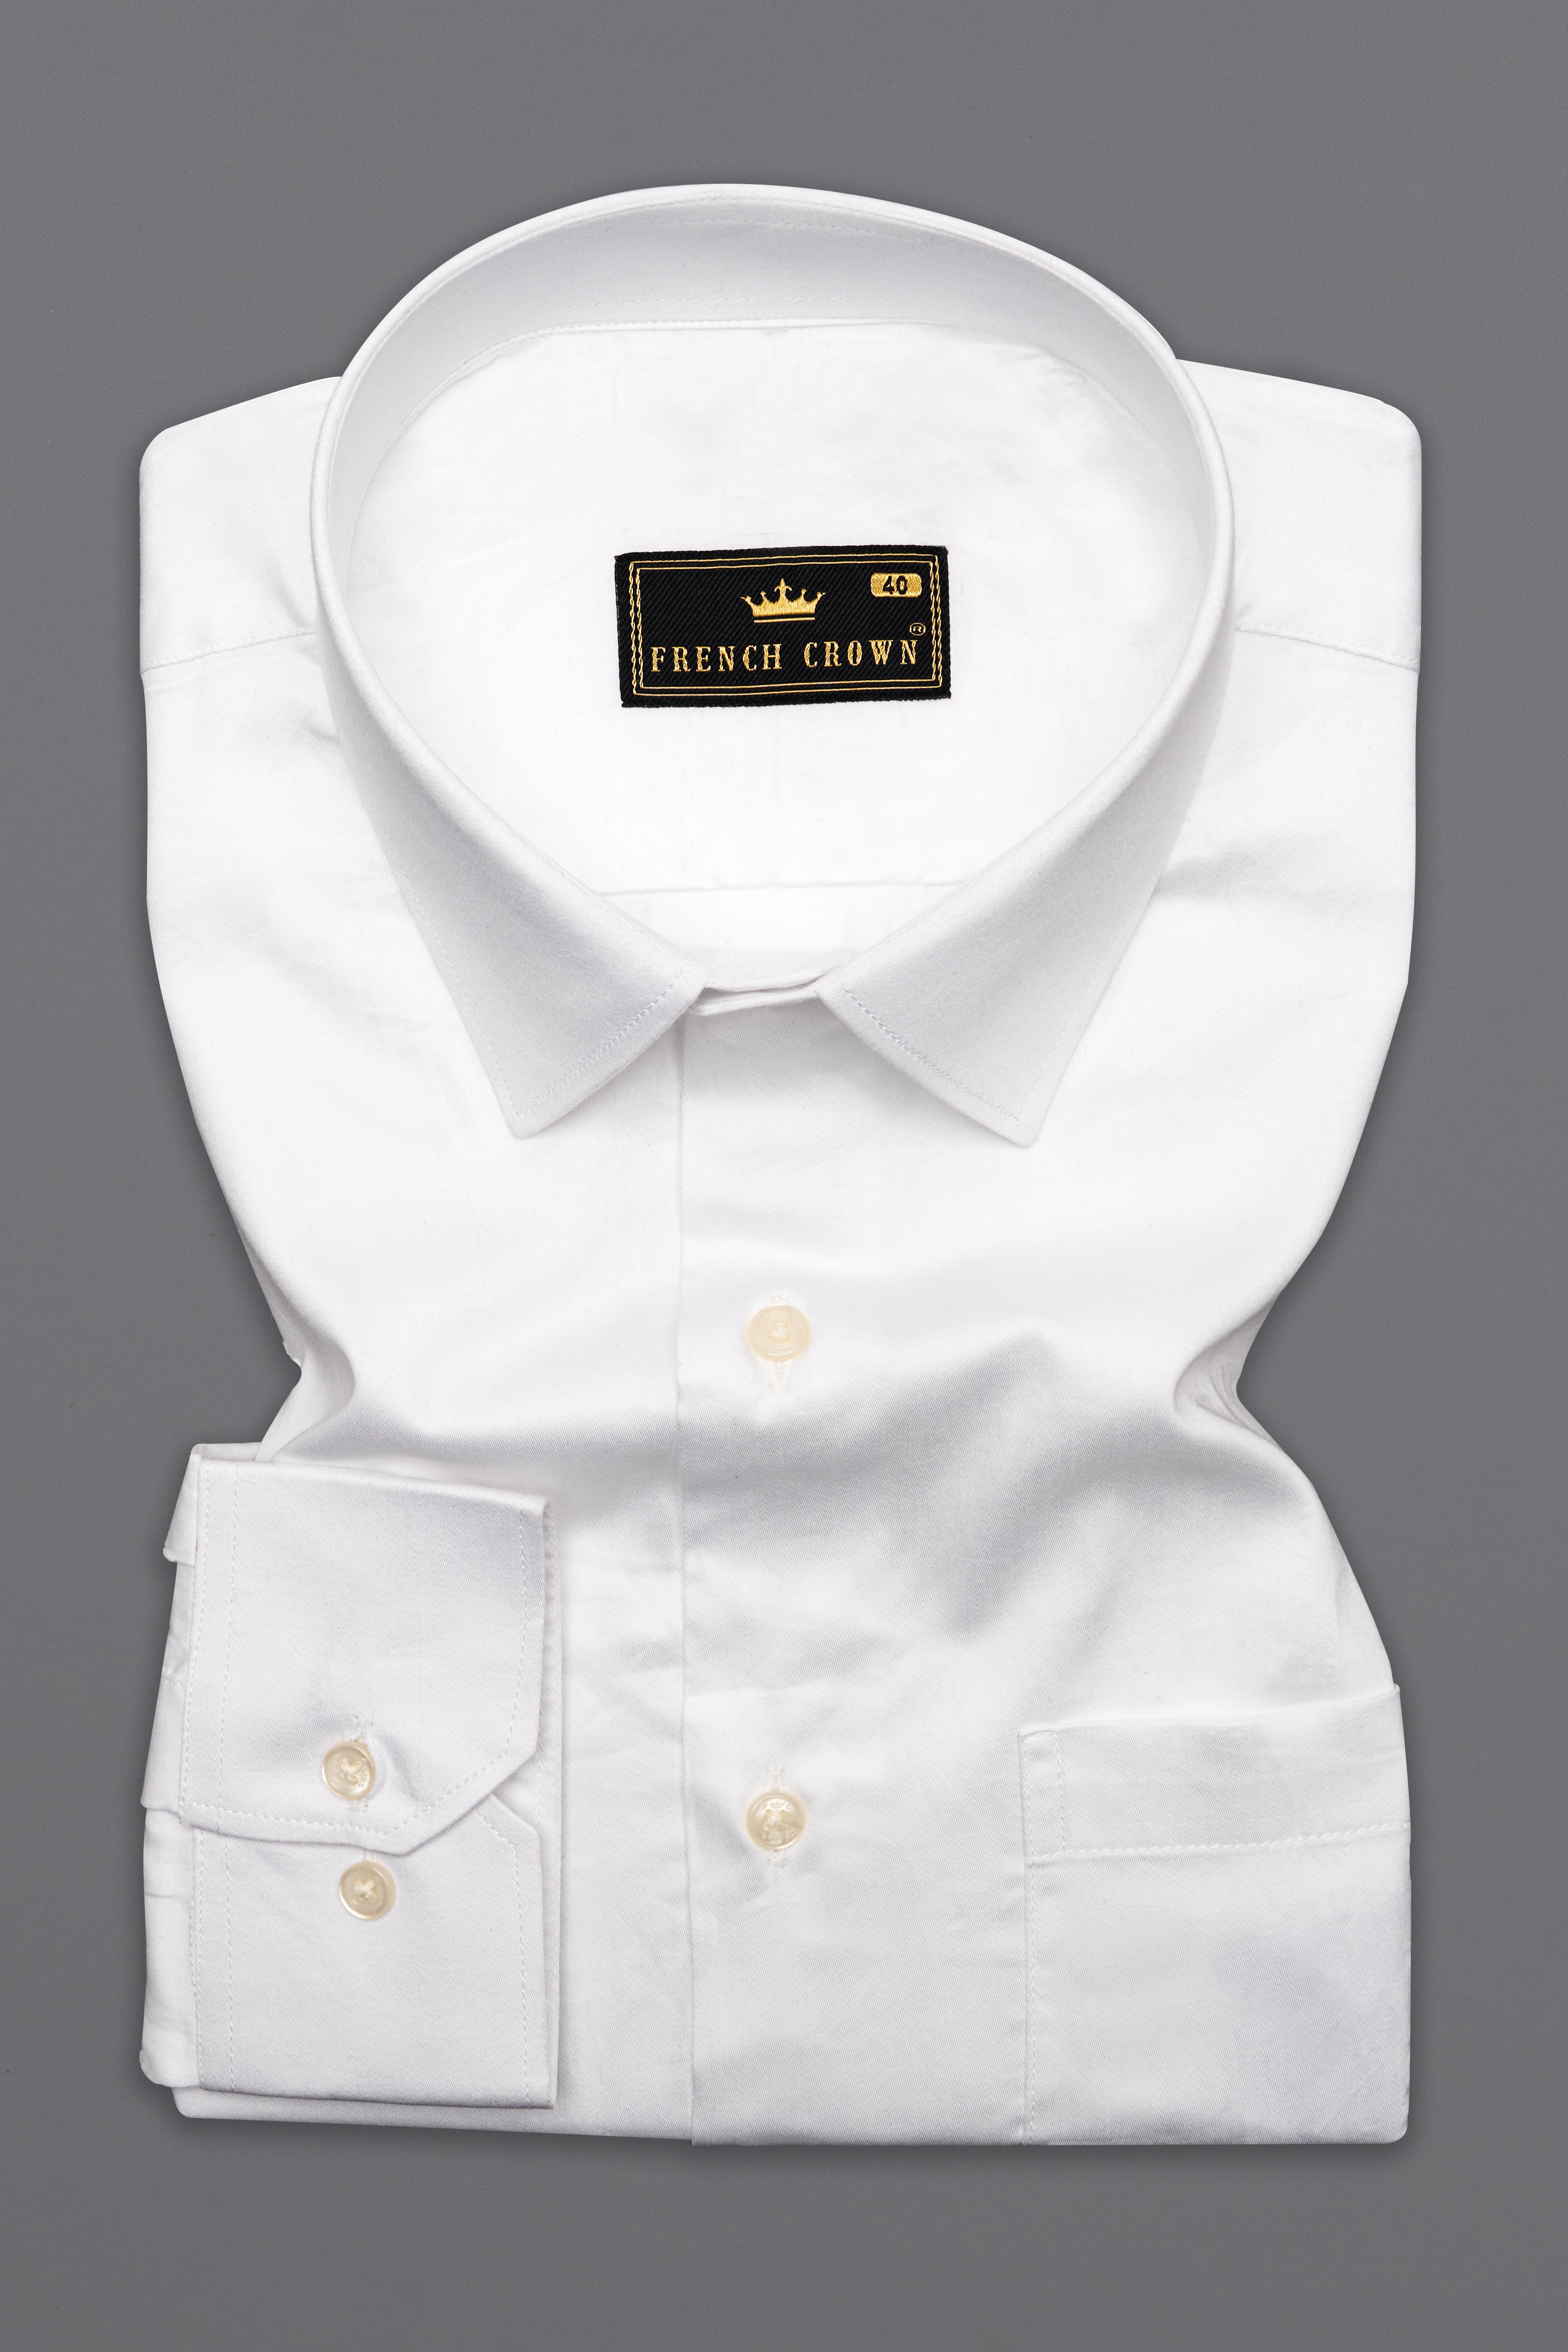 Bright White Printed Super Soft Premium Cotton Designer Shirt 10173-38, 10173-H-38, 10173-39, 10173-H-39, 10173-40, 10173-H-40, 10173-42, 10173-H-42, 10173-44, 10173-H-44, 10173-46, 10173-H-46, 10173-48, 10173-H-48, 10173-50, 10173-H-50, 10173-52, 10173-H-52A